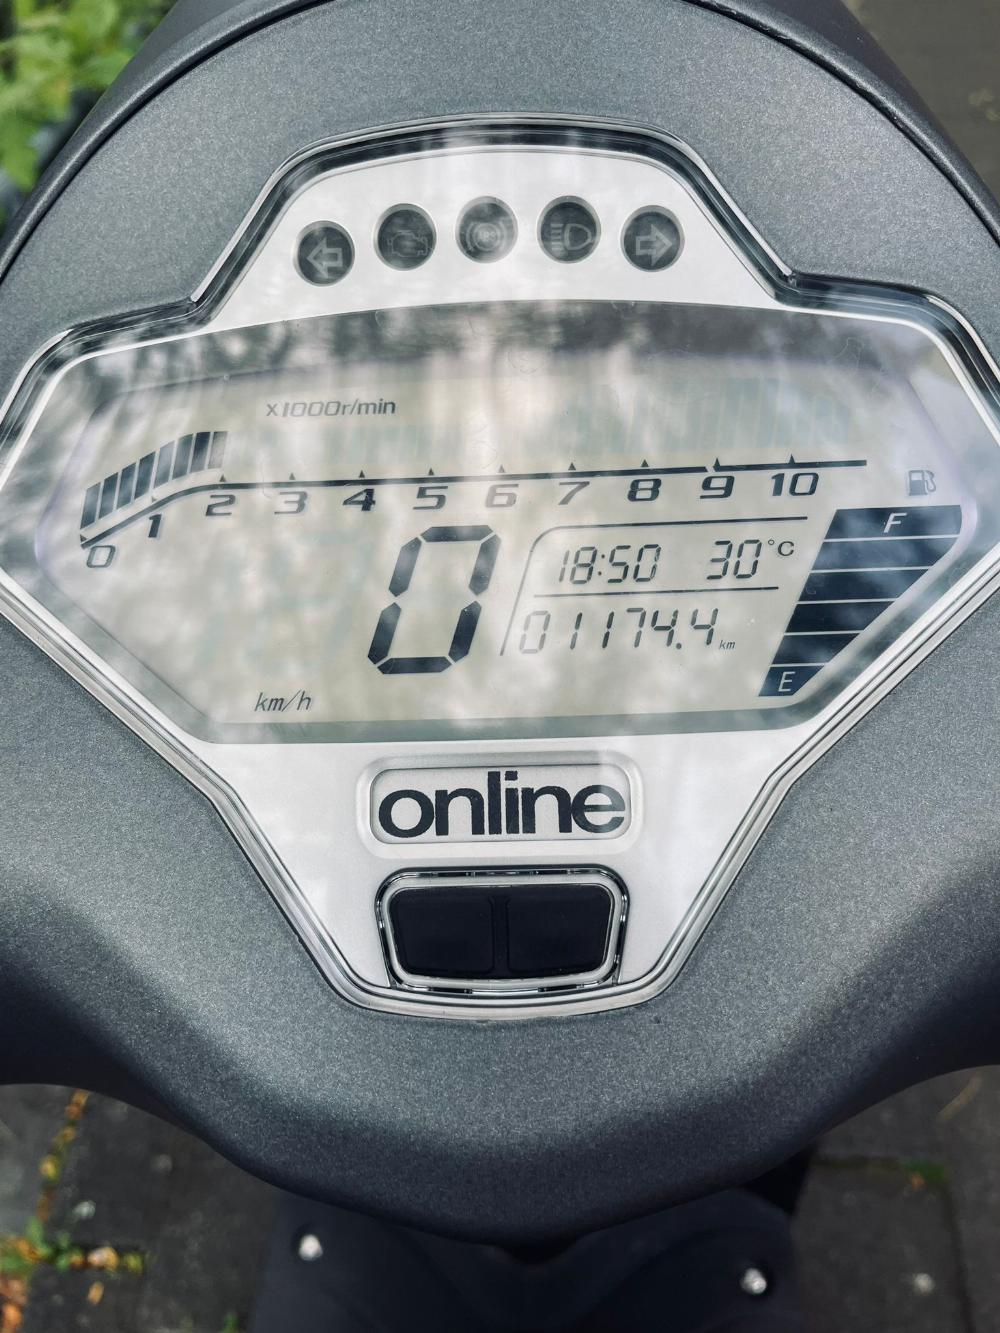 Motorrad verkaufen Online Memory Ankauf